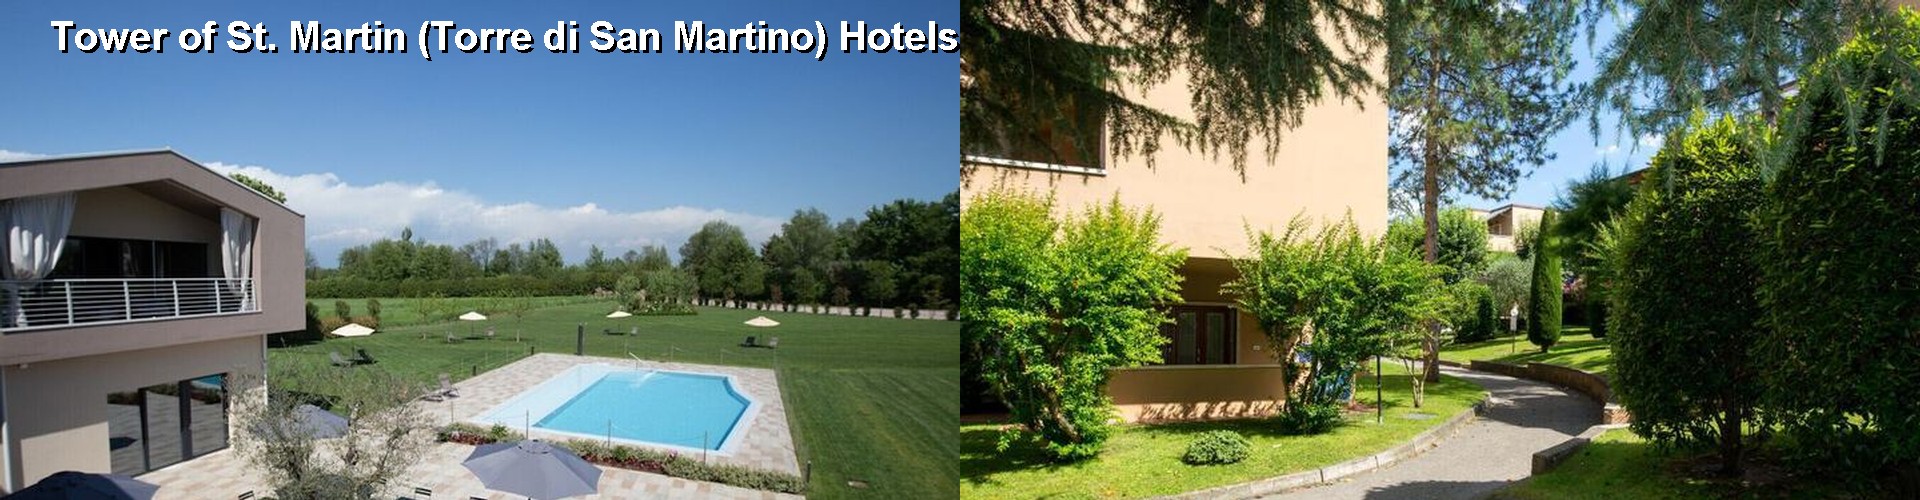 5 Best Hotels near Tower of St. Martin (Torre di San Martino)